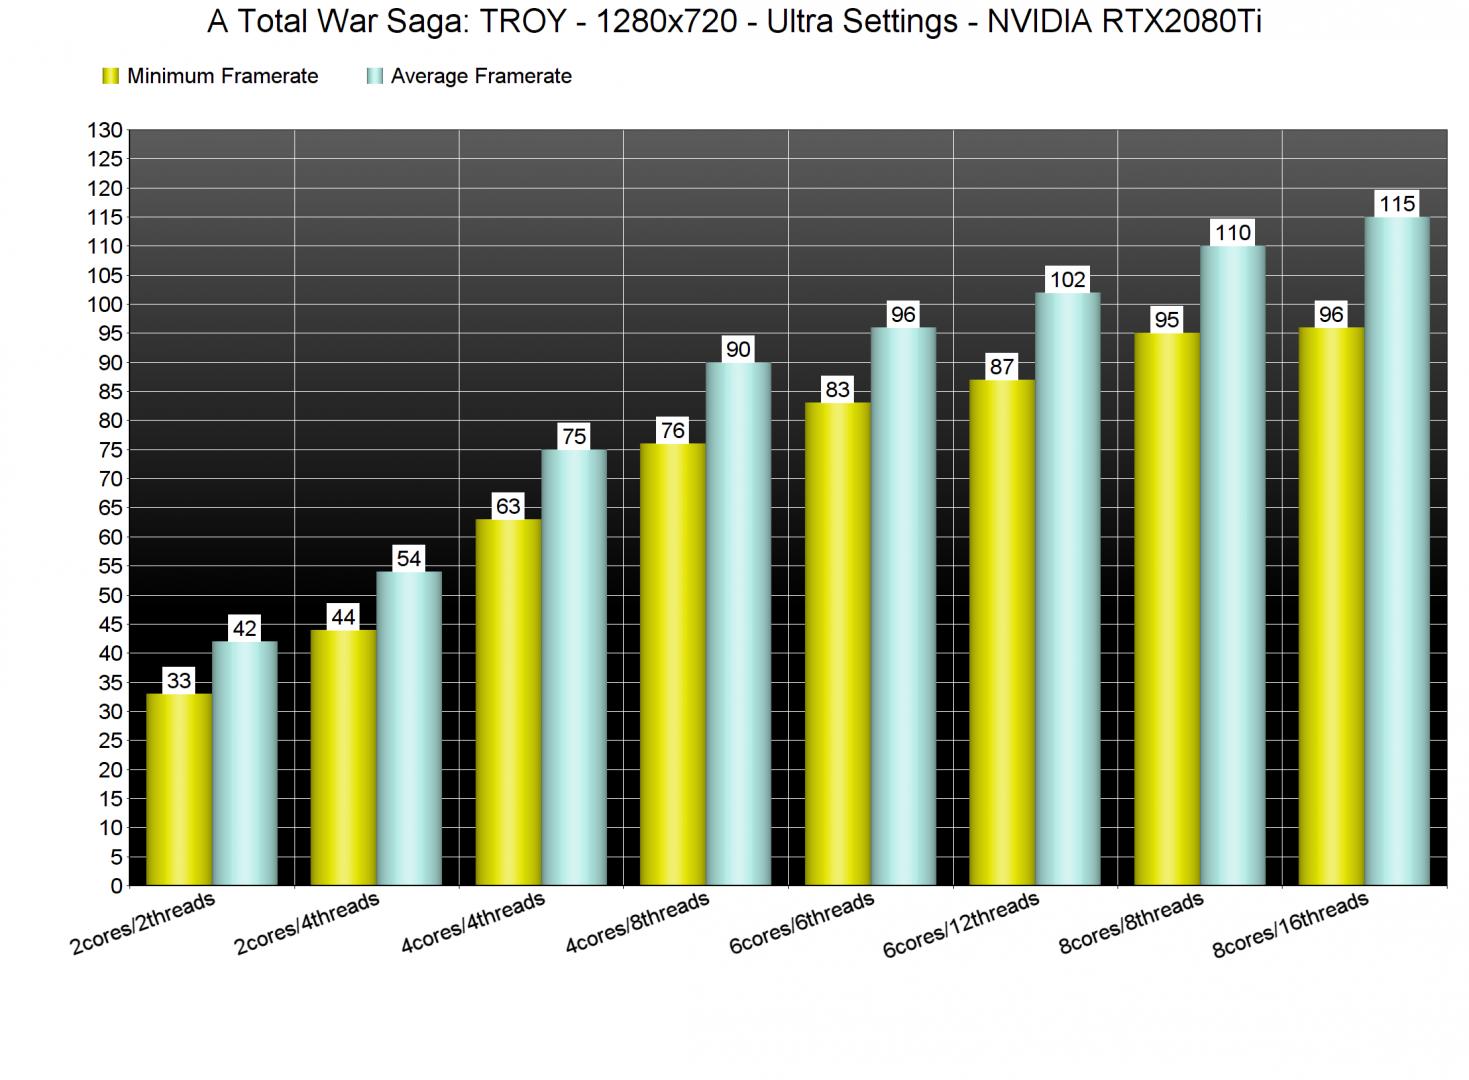 A Total War Saga TROY CPU benchmarks